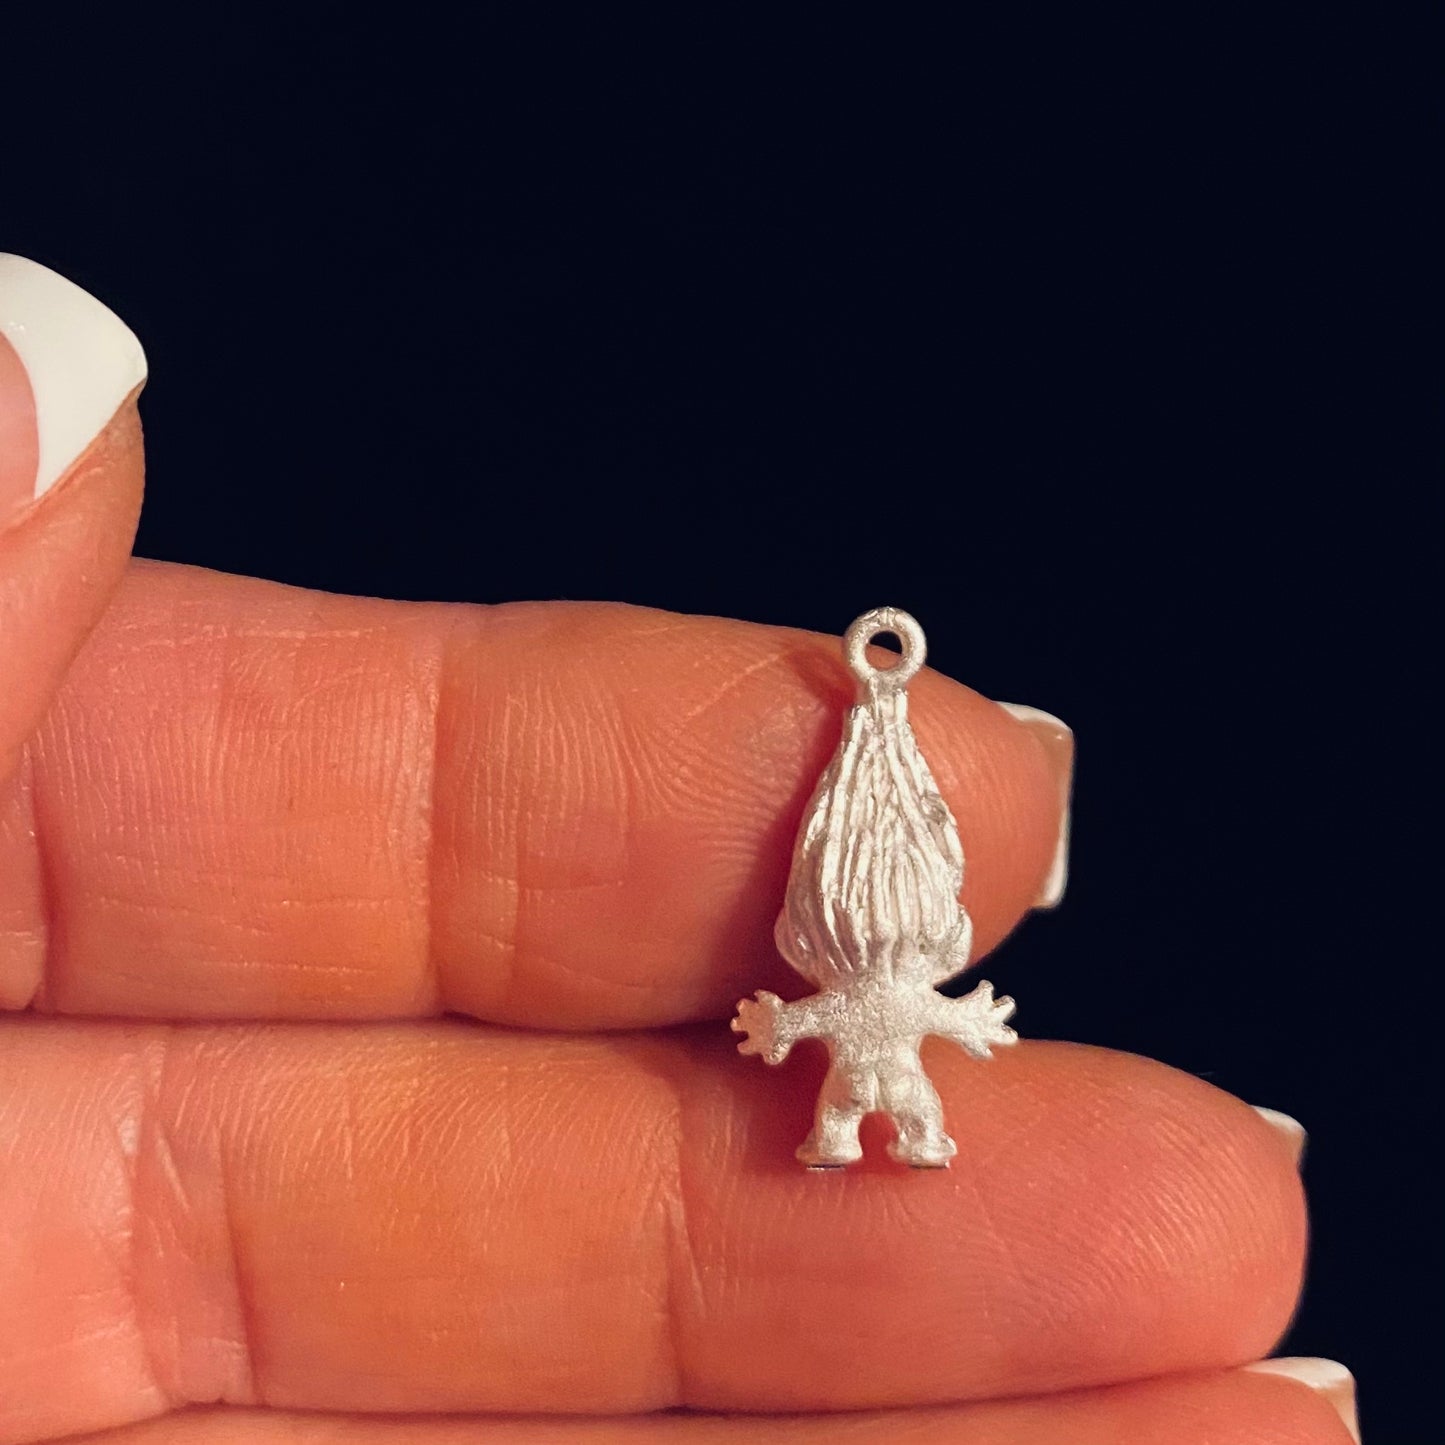 Tiny Troll Cast Charm for Jewelry Design